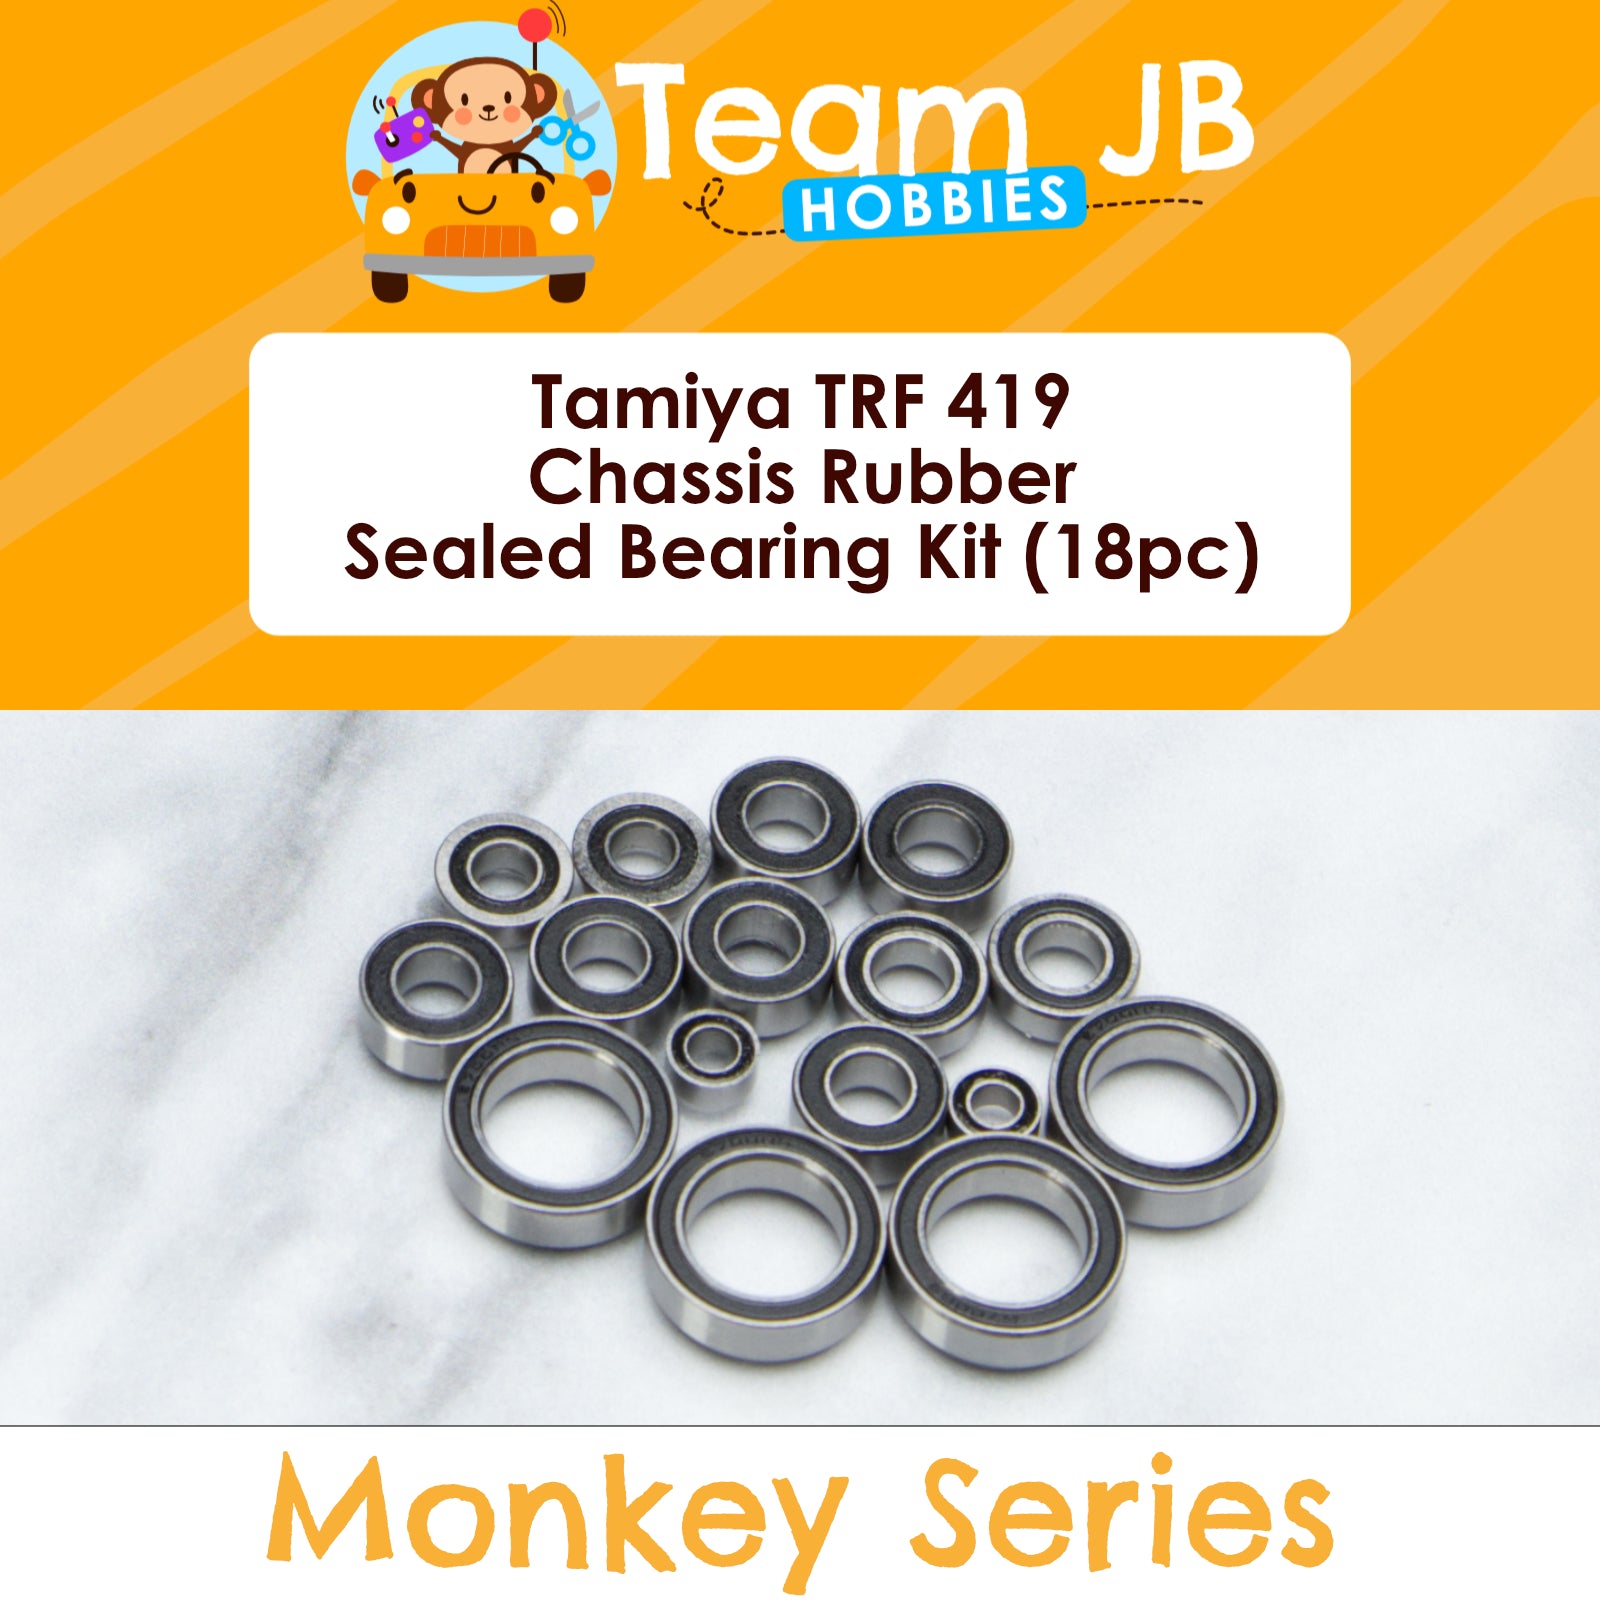 Tamiya TRF 419 Chassis Rubber - Sealed Bearing Kit